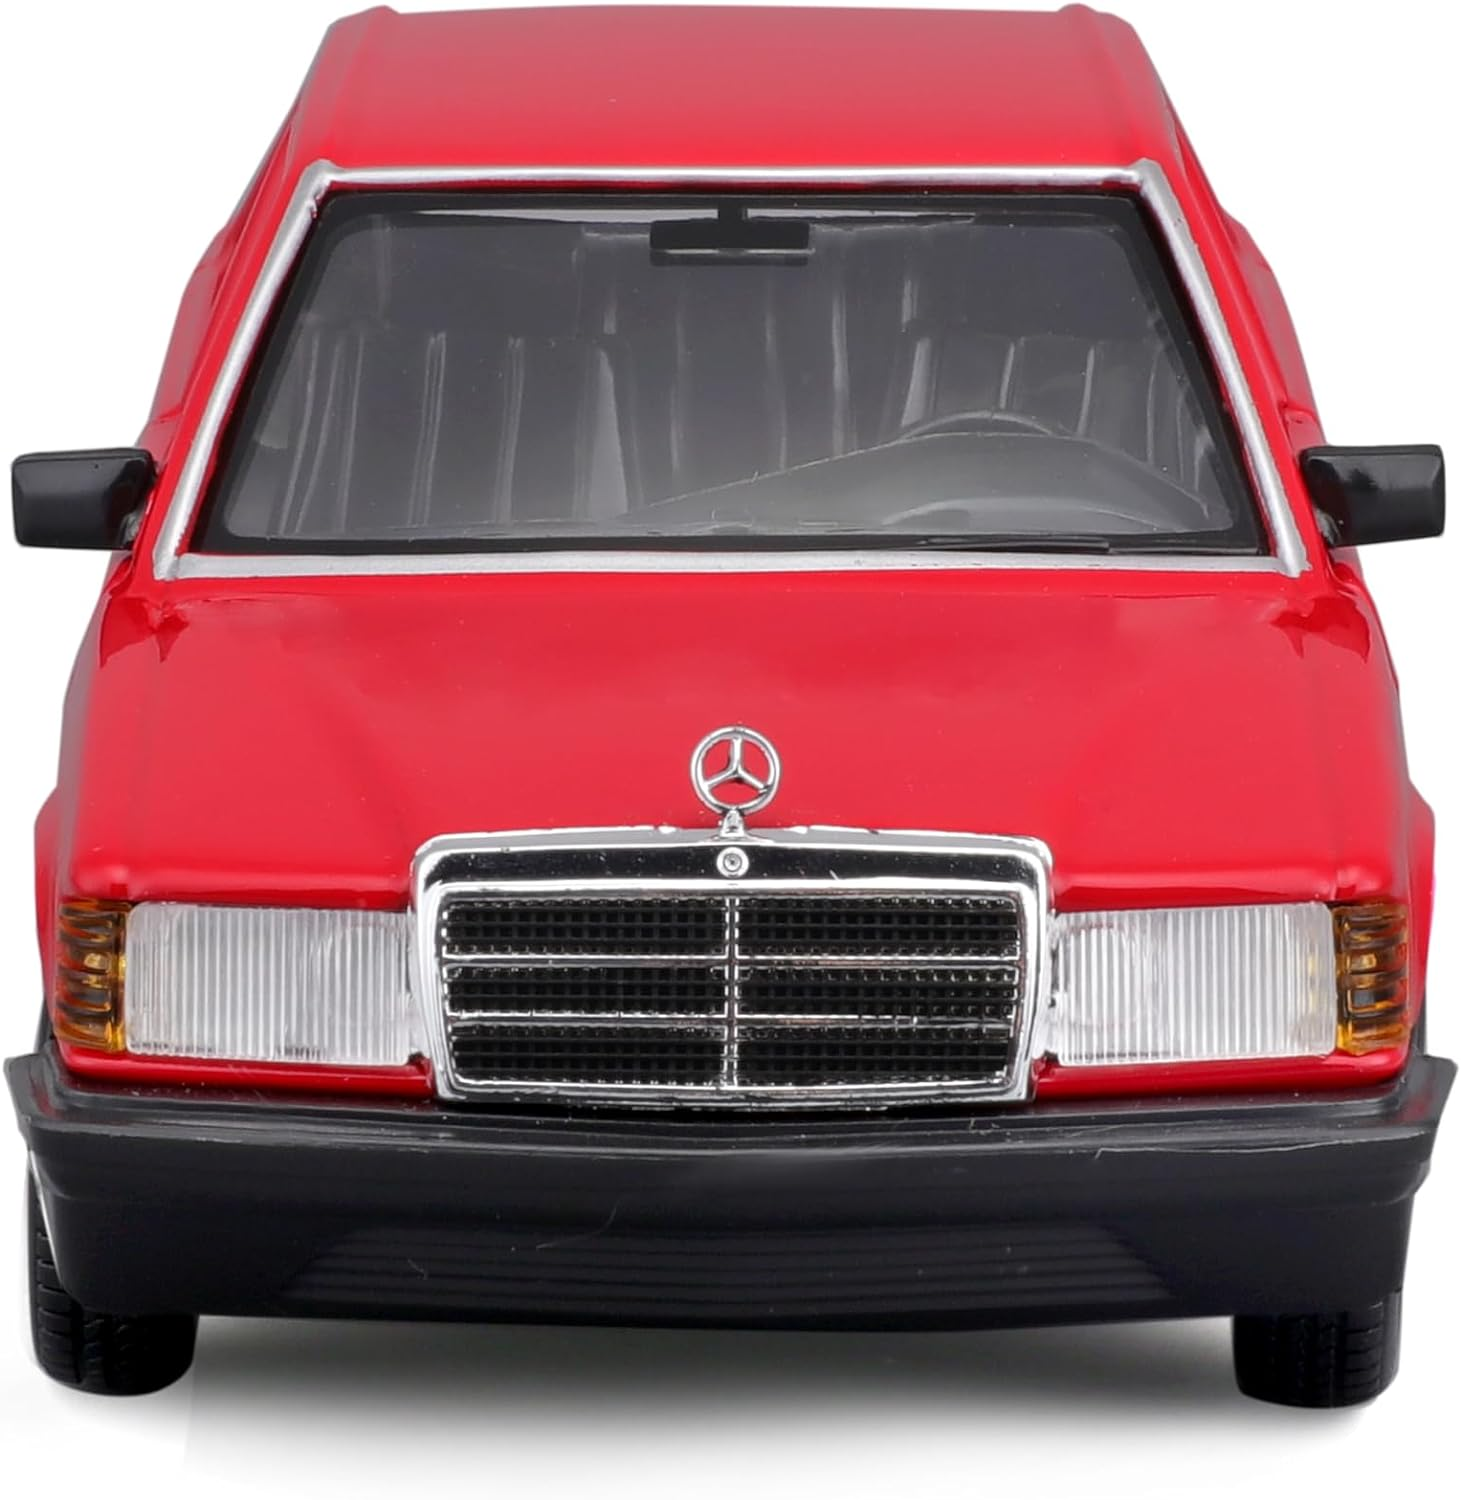 Spielzeugauto (rot, Maßstab Mercedes BBURAGO 190E 1:24) ´87